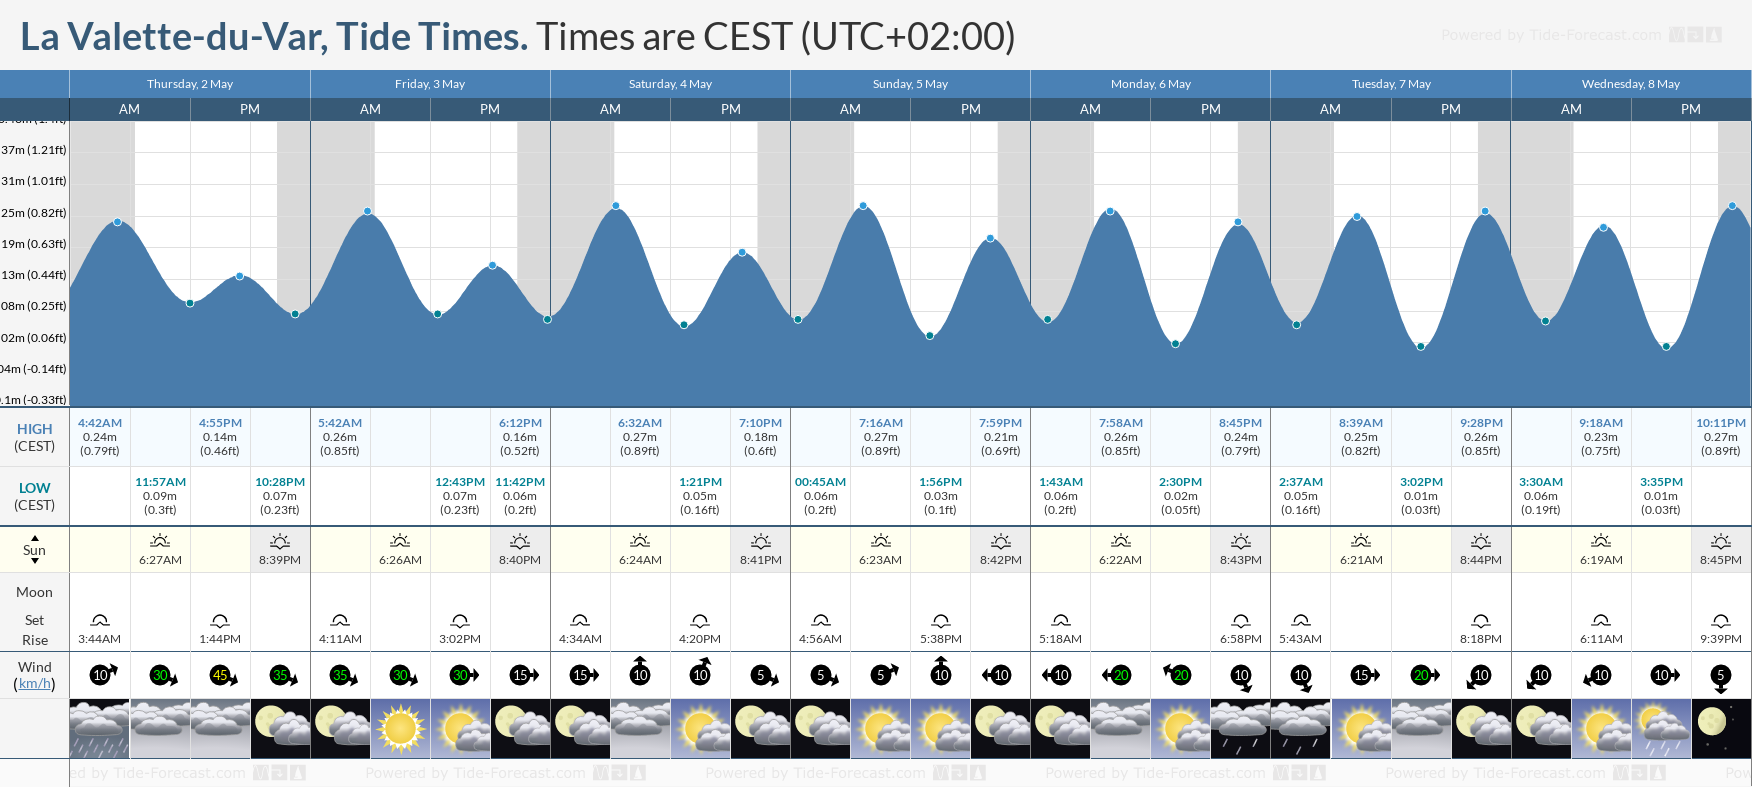 La Valette-du-Var Tide Chart including high and low tide times for the next 7 days